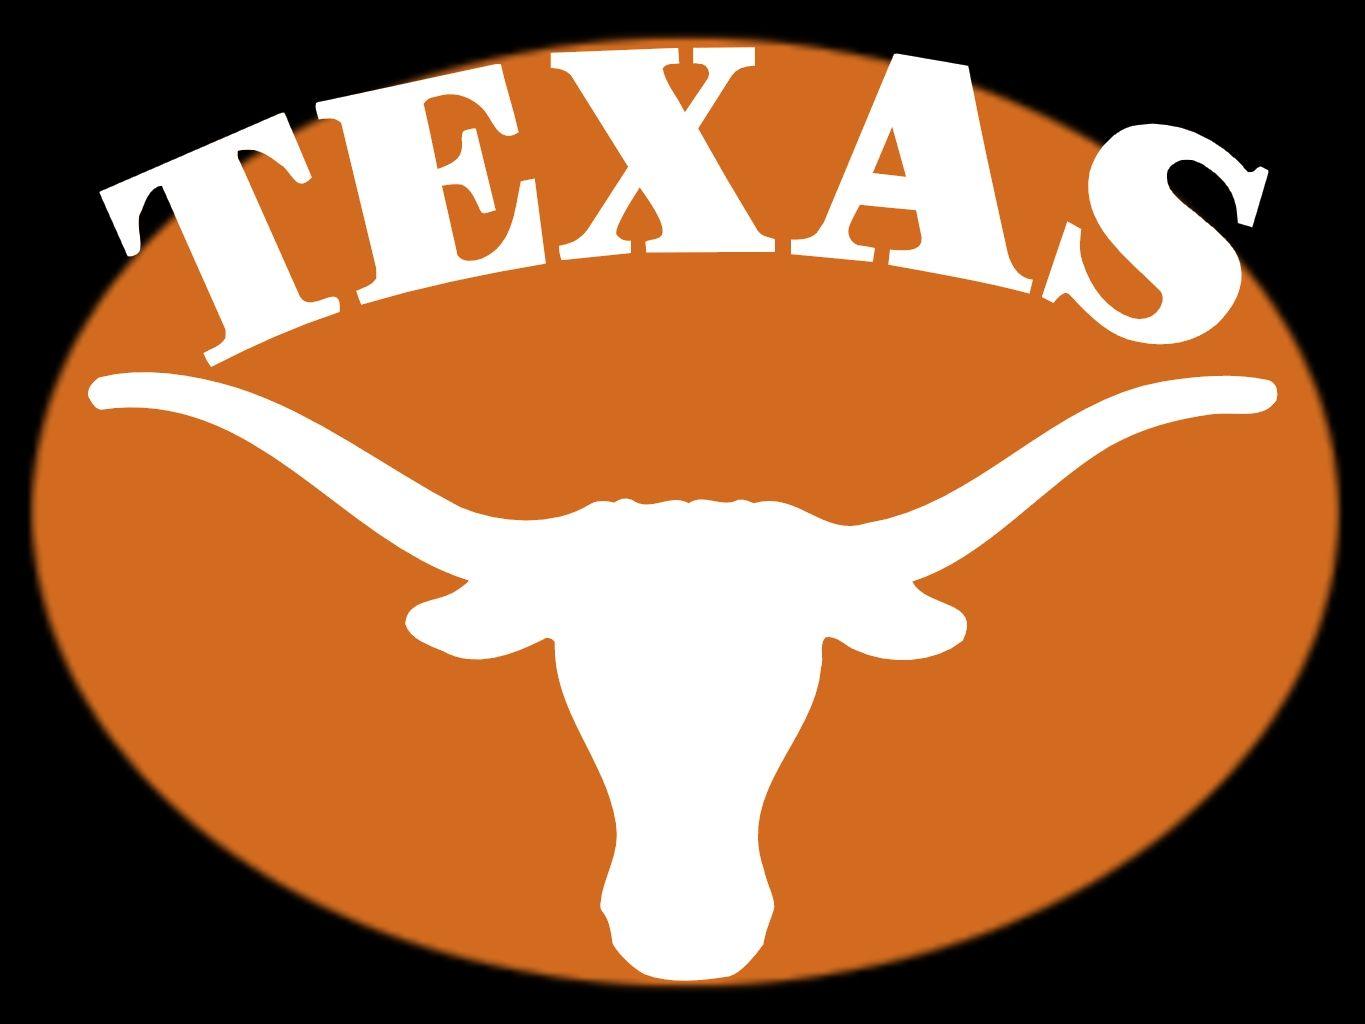 Texas Longhorns logo in white on an orange circle on a black background - Longhorn